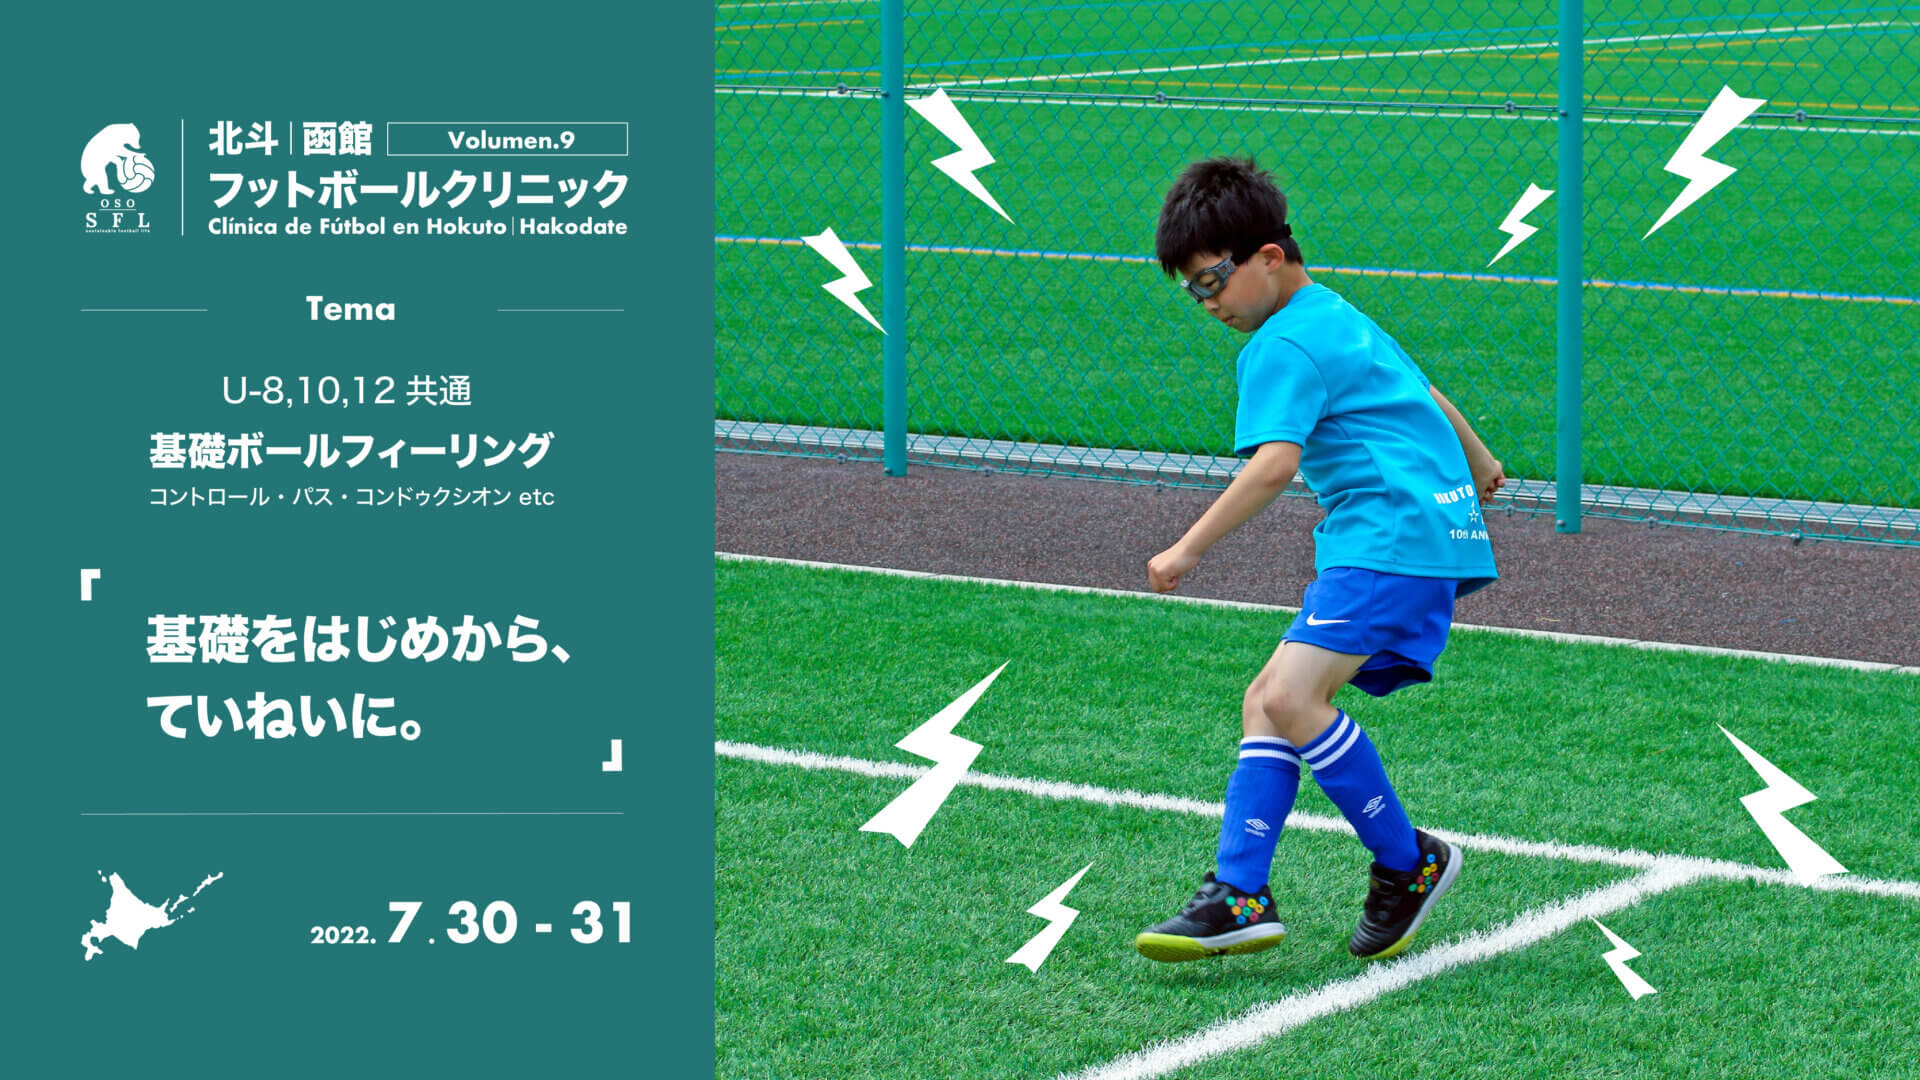 20220630_notice-hokuto-hakodate-football-clinic-2022-vol9